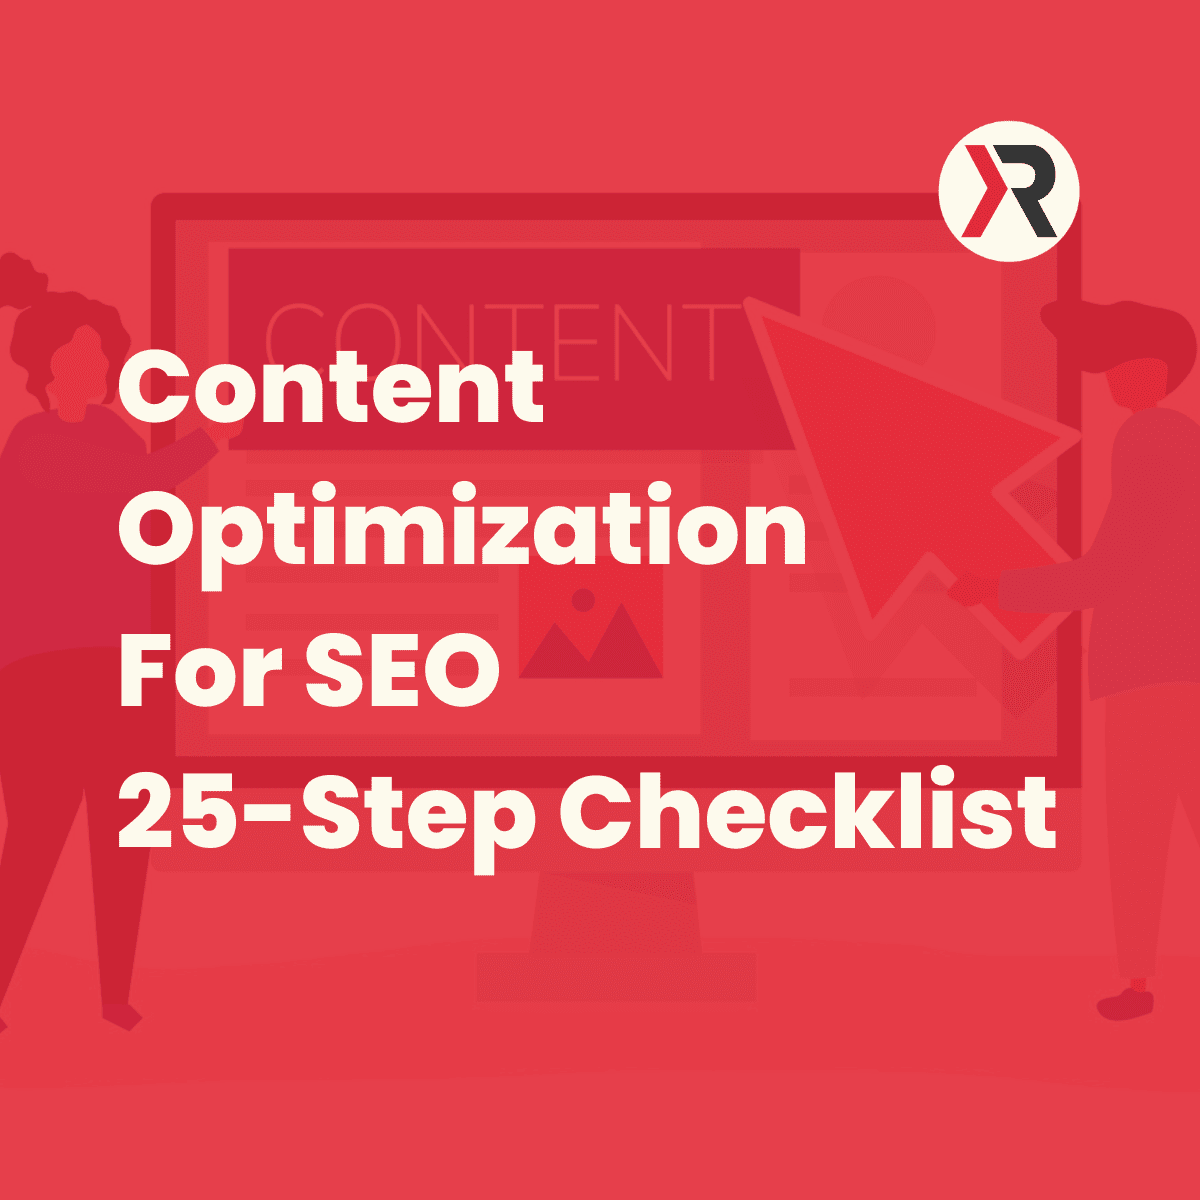 Content Optimization for SEO 25-step checklist